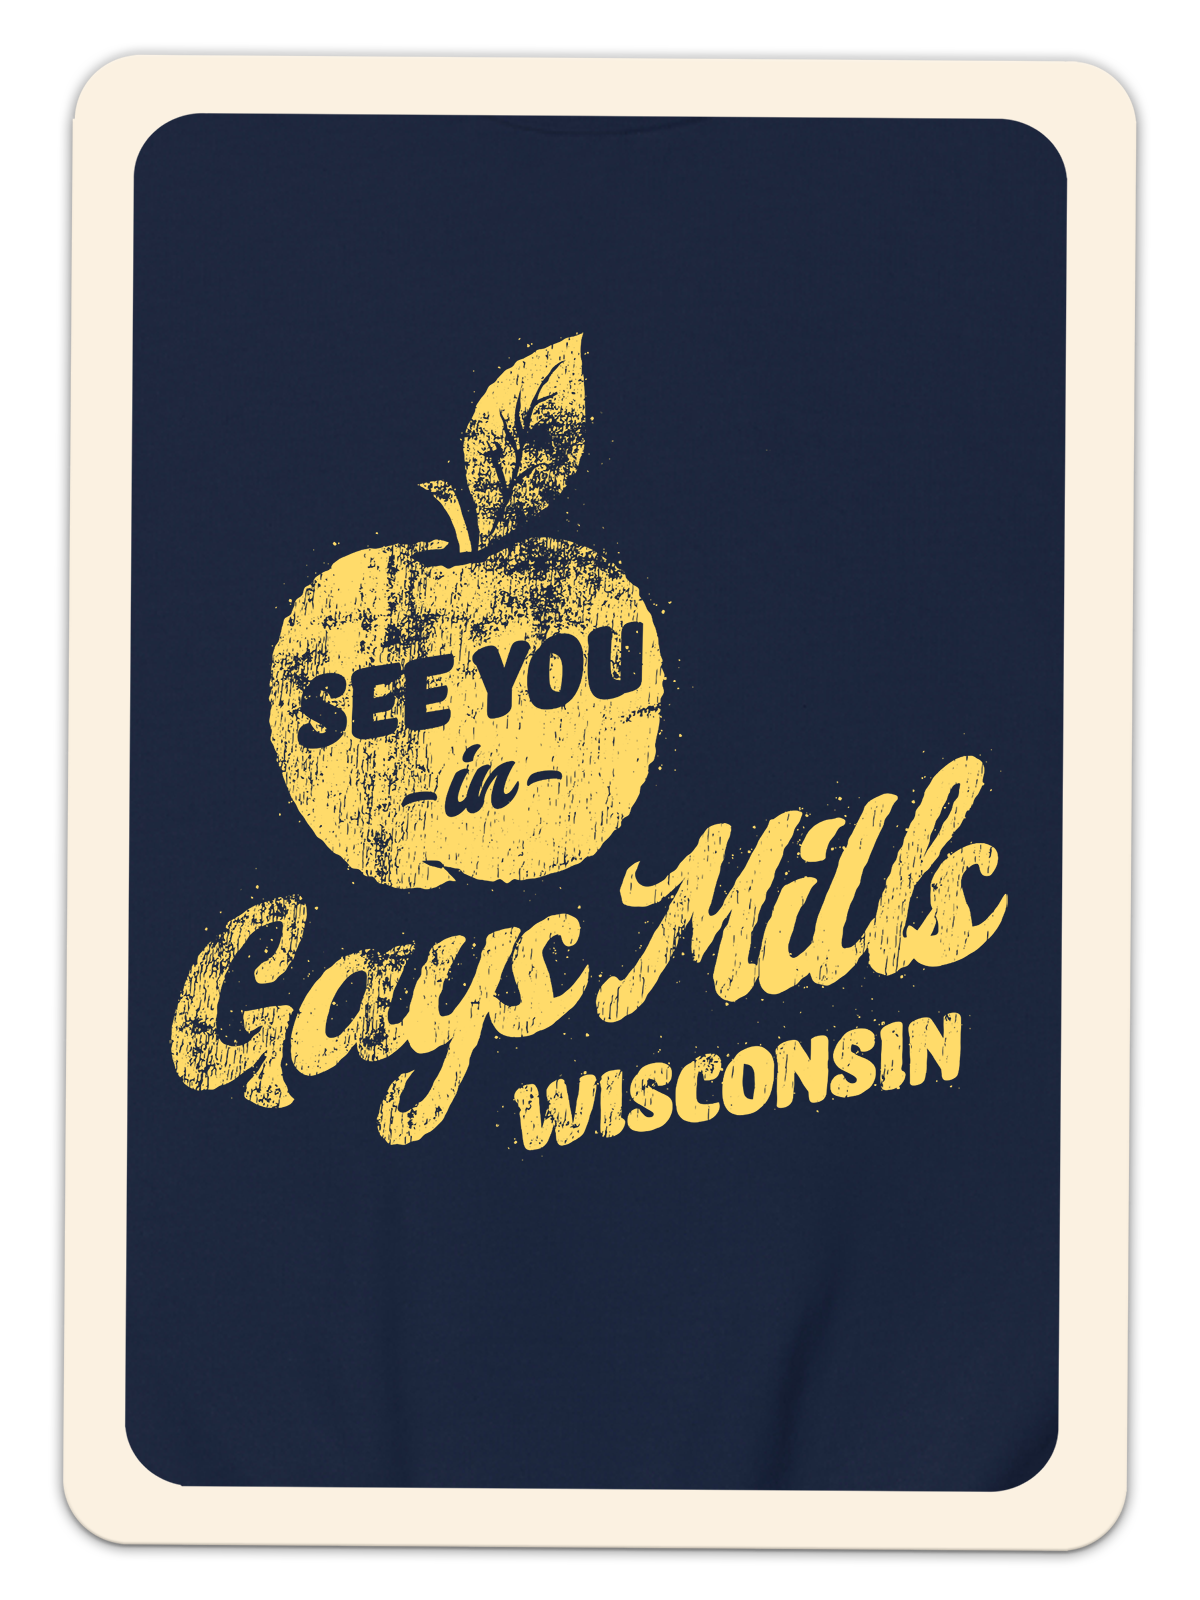 See You In Gays Mills Wisconsin Adult Crewneck Sweatshirt